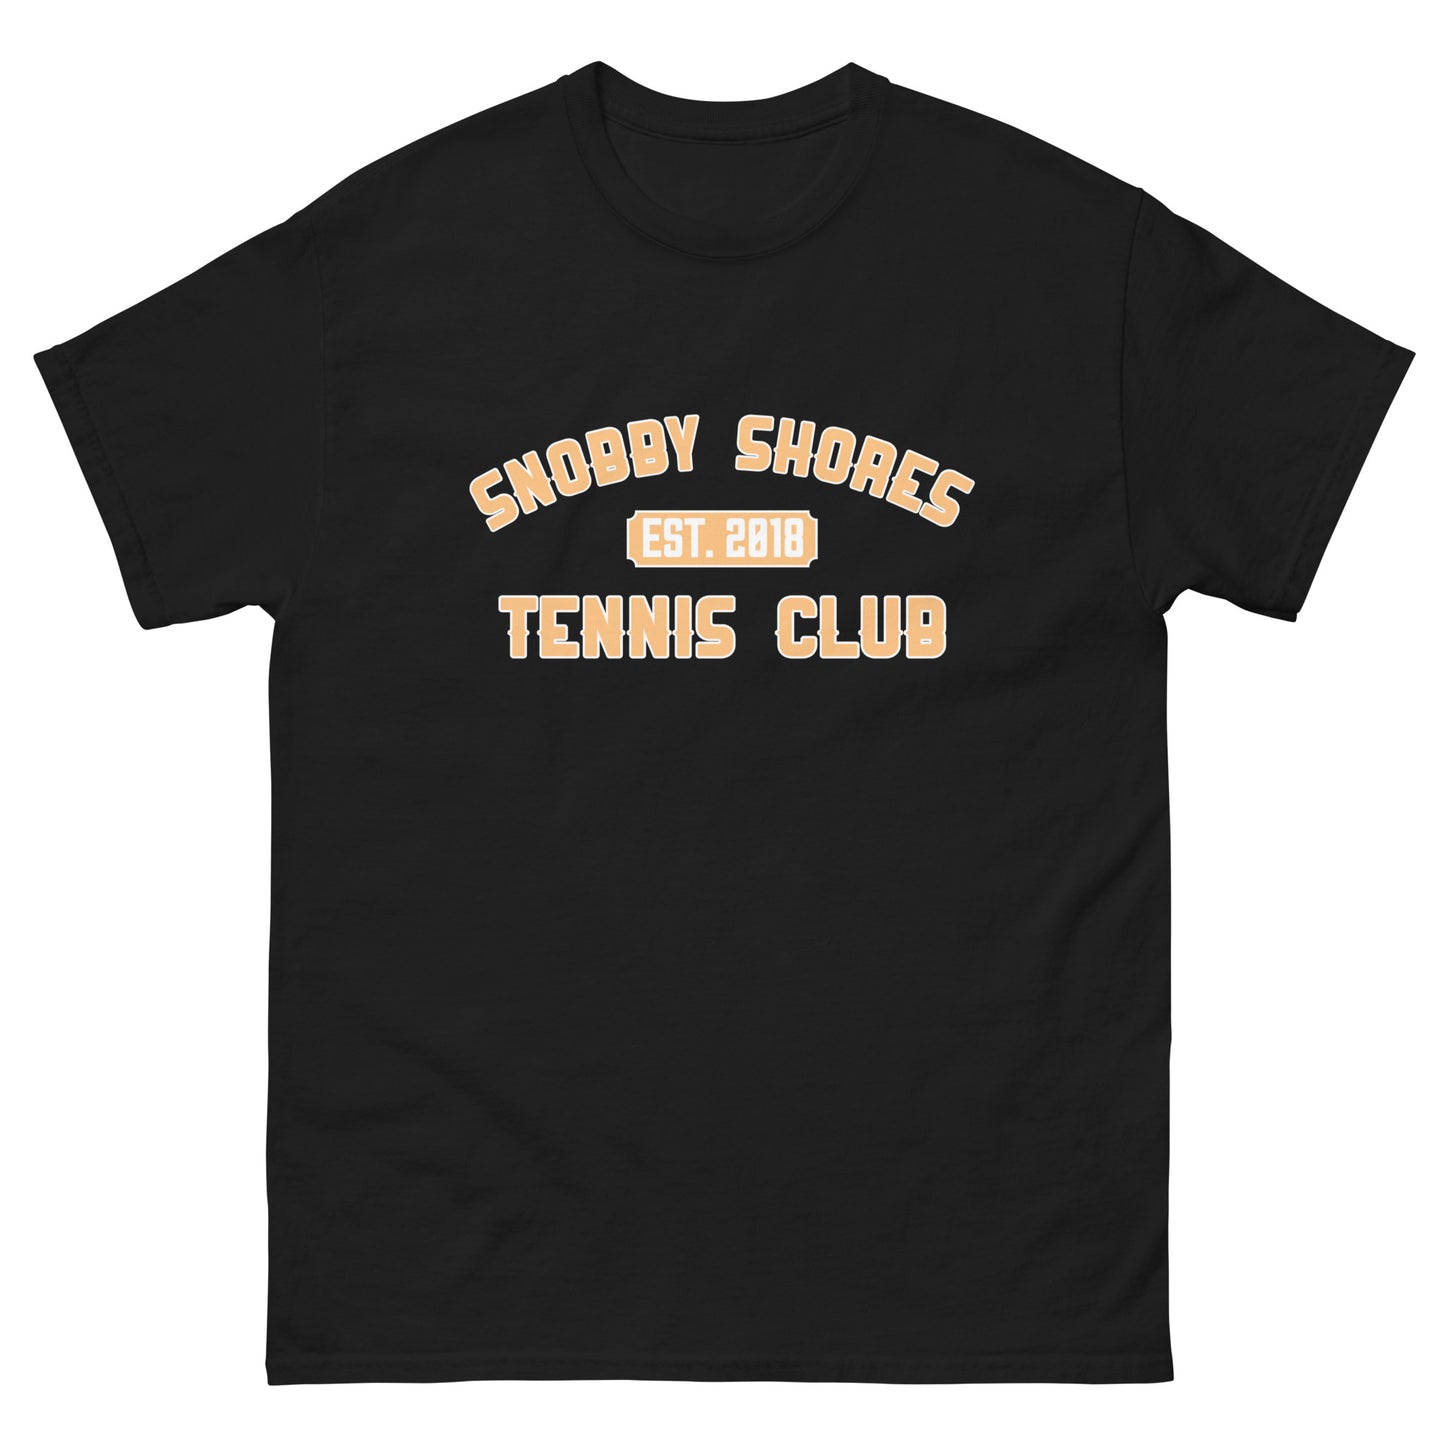 Snobby Shores Tennis Club Tee